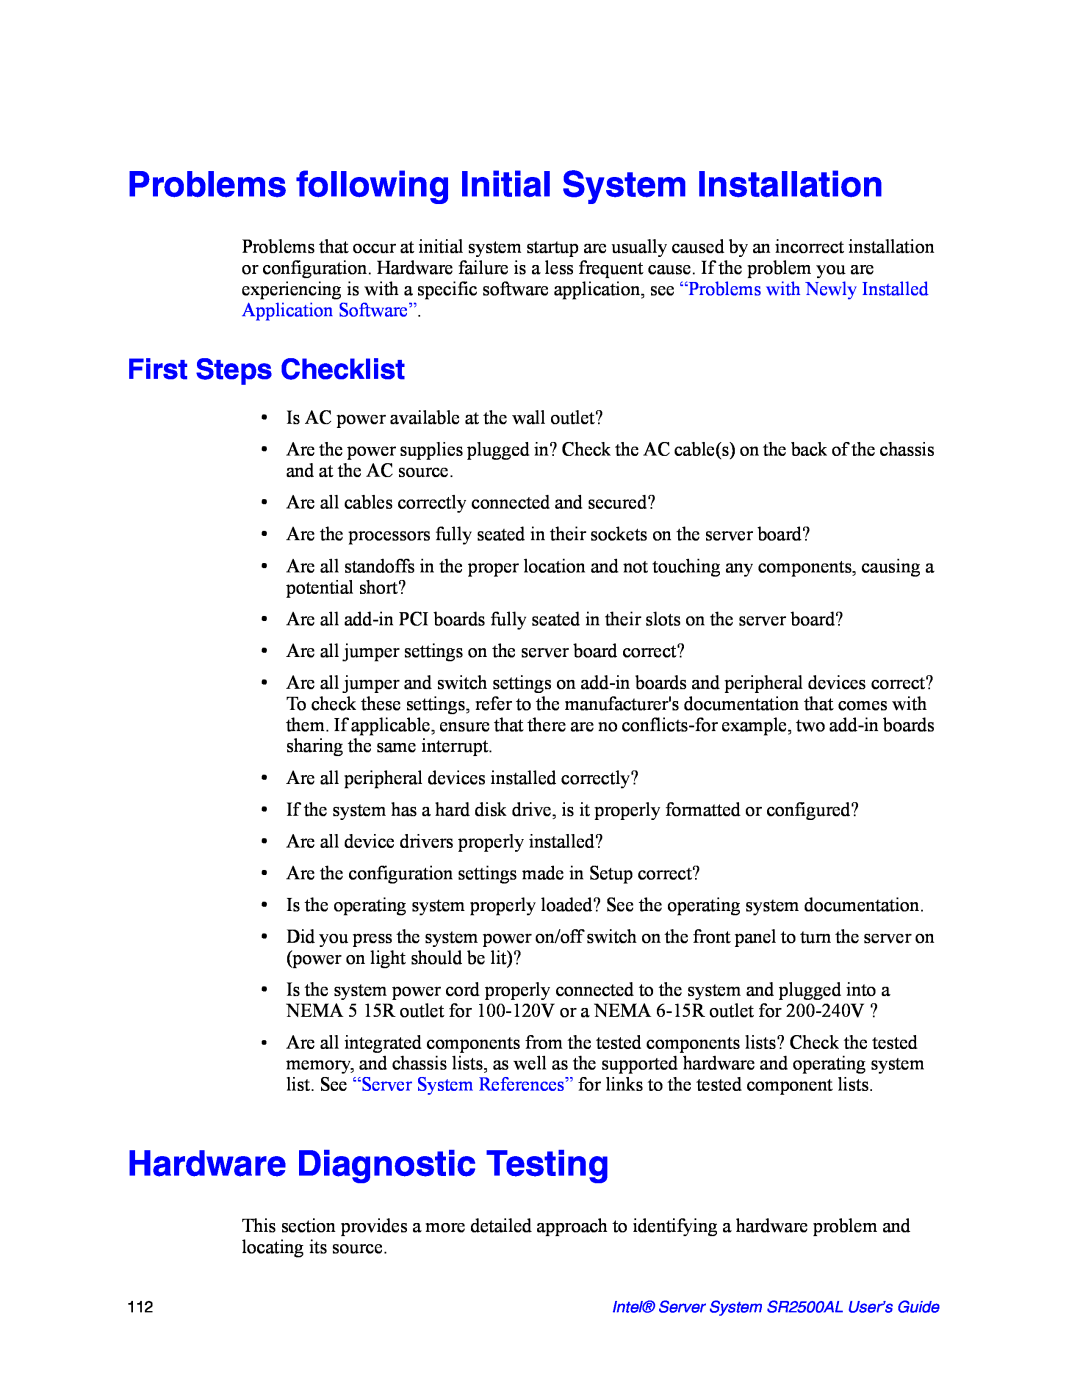 Intel SR2500AL manual Problems following Initial System Installation, Hardware Diagnostic Testing, First Steps Checklist 